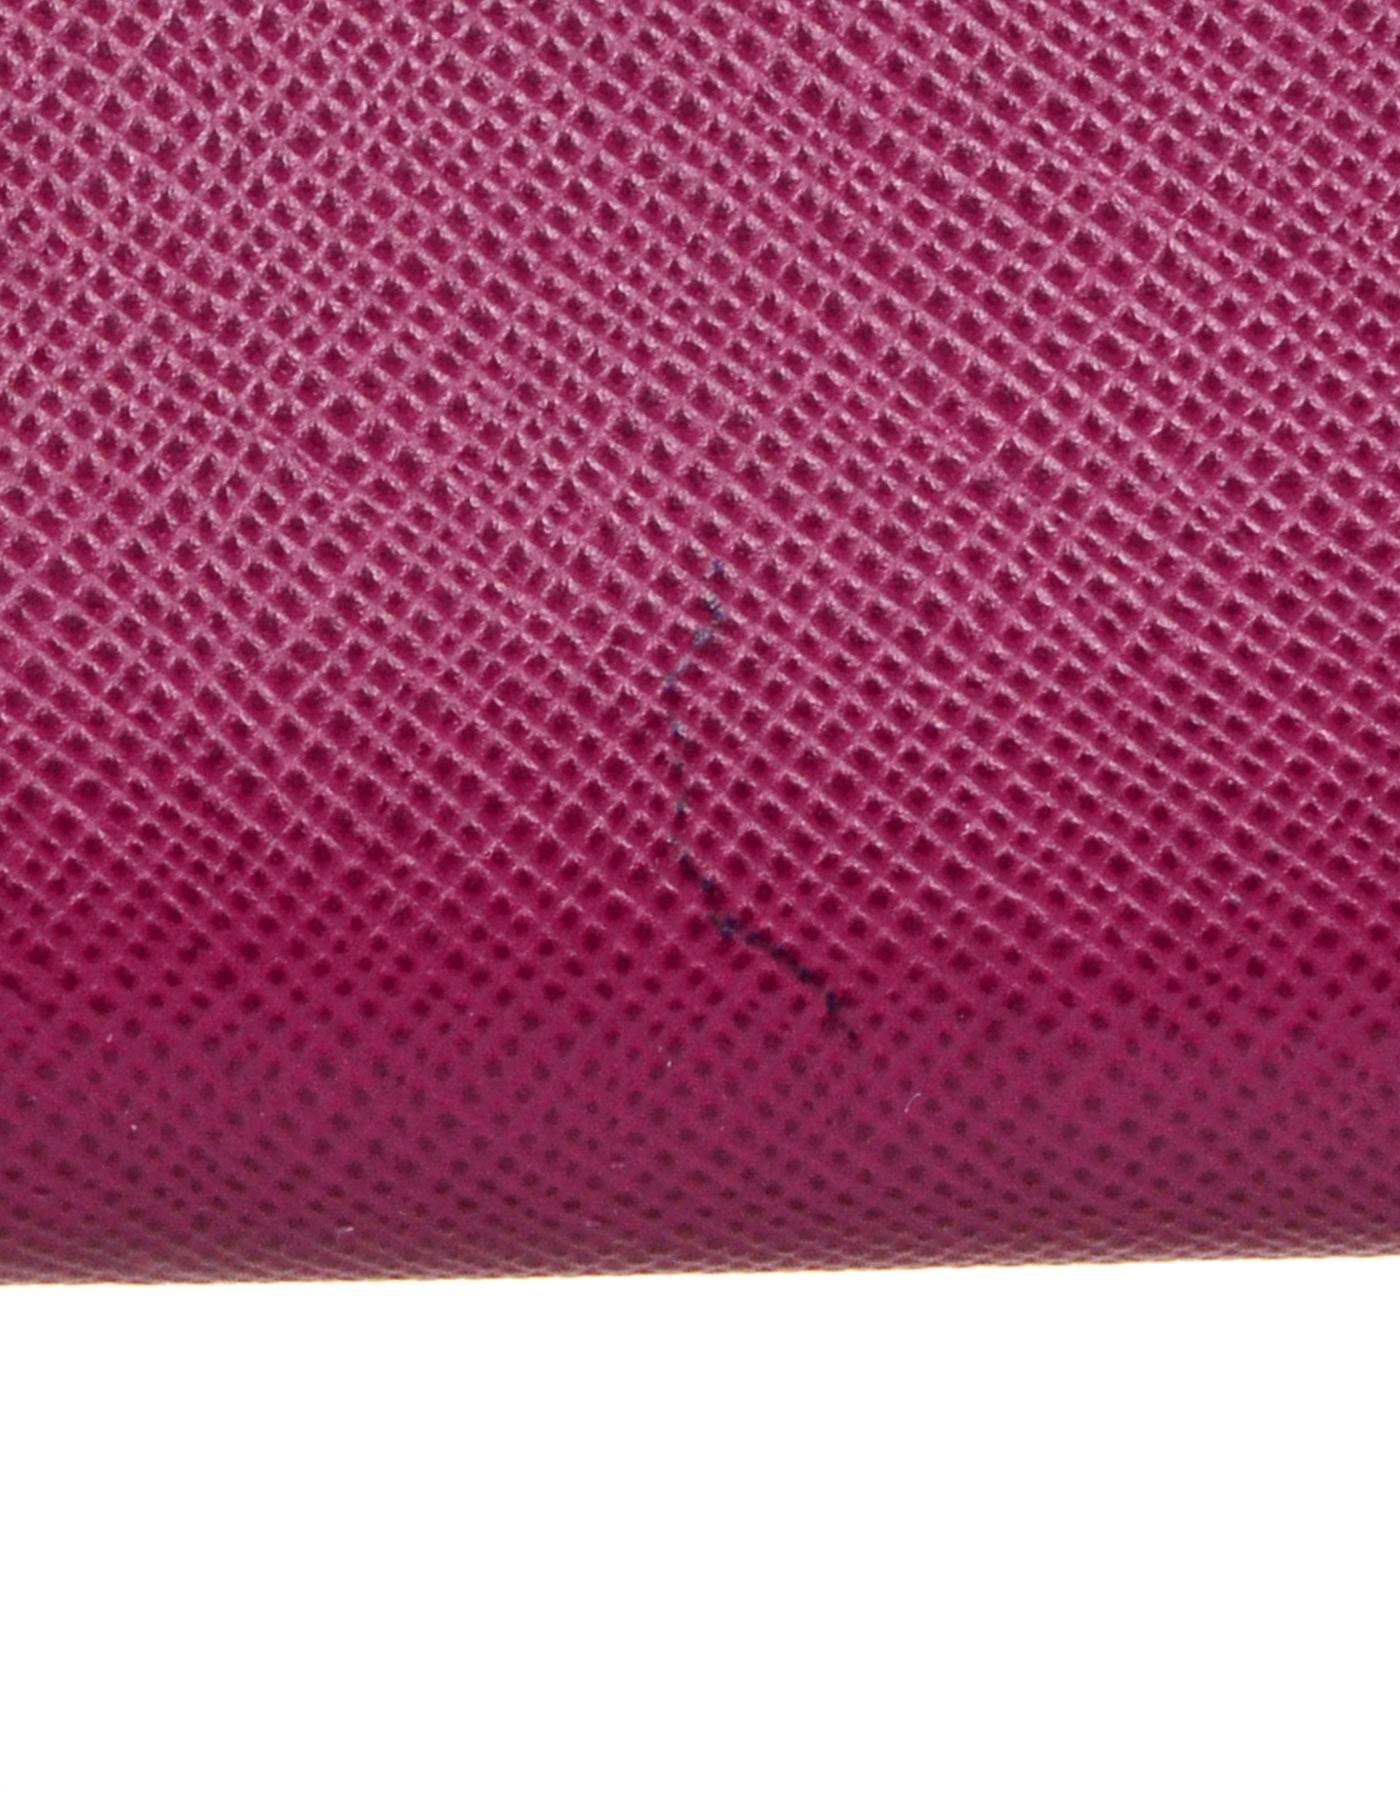 Prada Raspberry Saffiano Metal Oro Chain Wallet Crossbody Bag rt $875 3